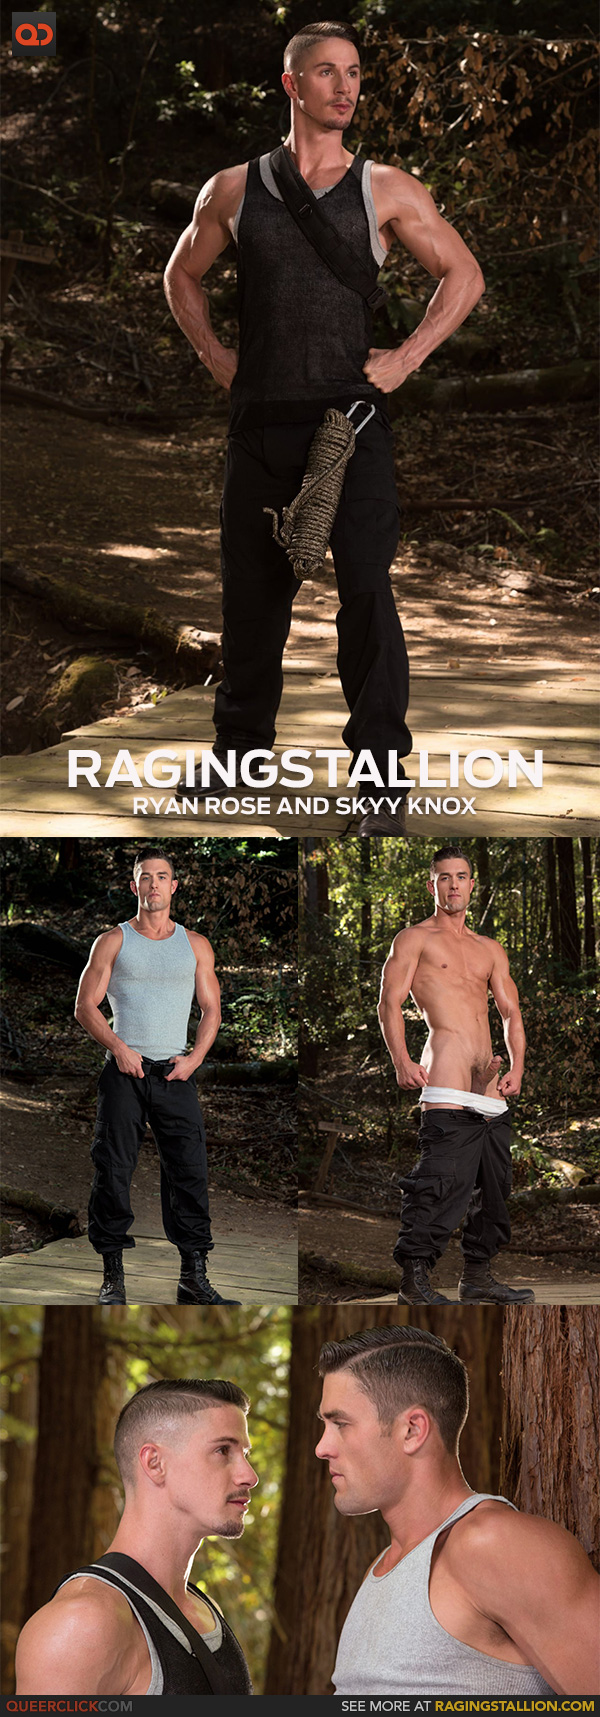 Raging Stallion: Ryan Rose and Skyy Knox